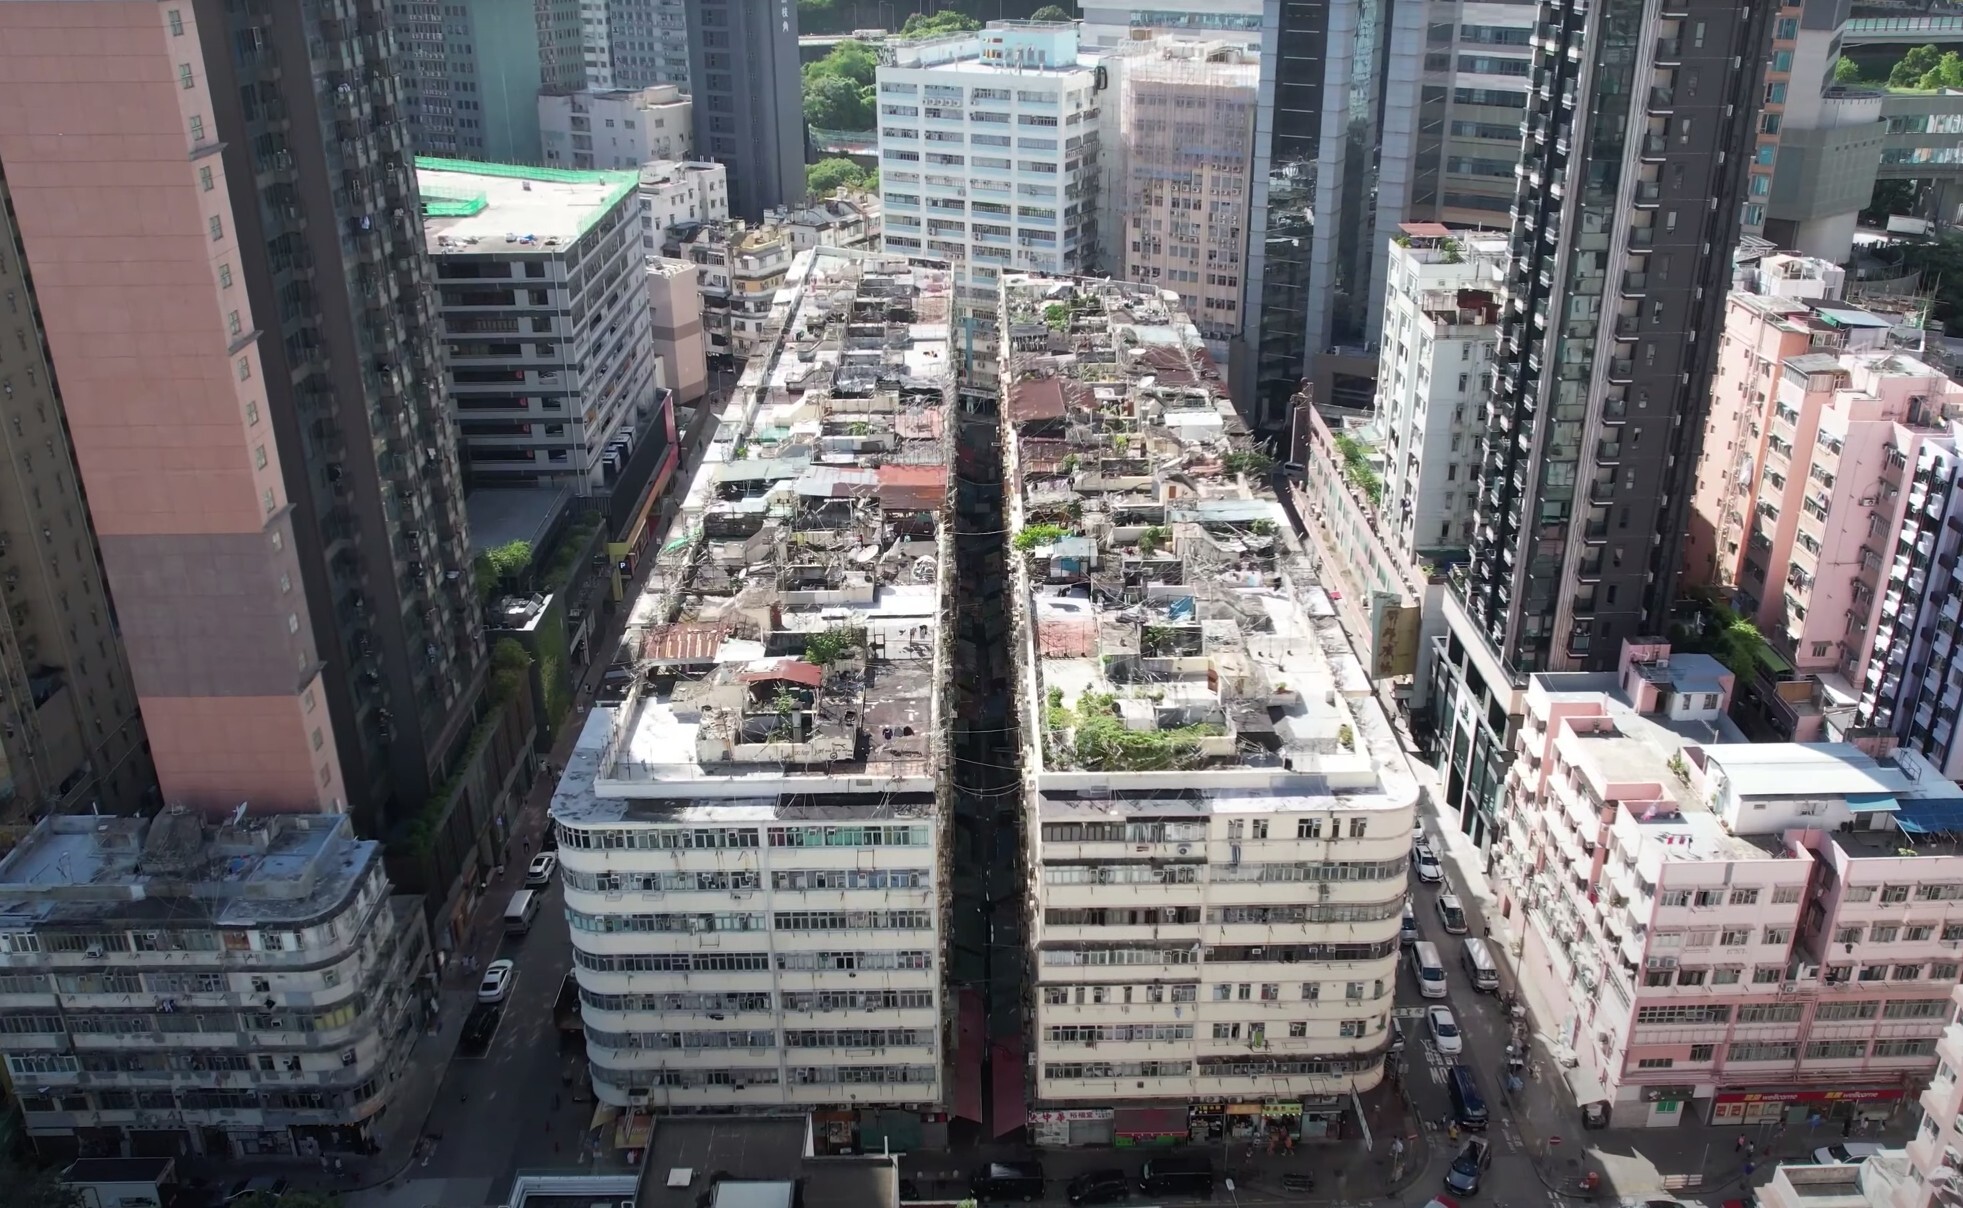 The tenements on Kim Shin Lane were built more than 60 years ago. Photo: SCMP